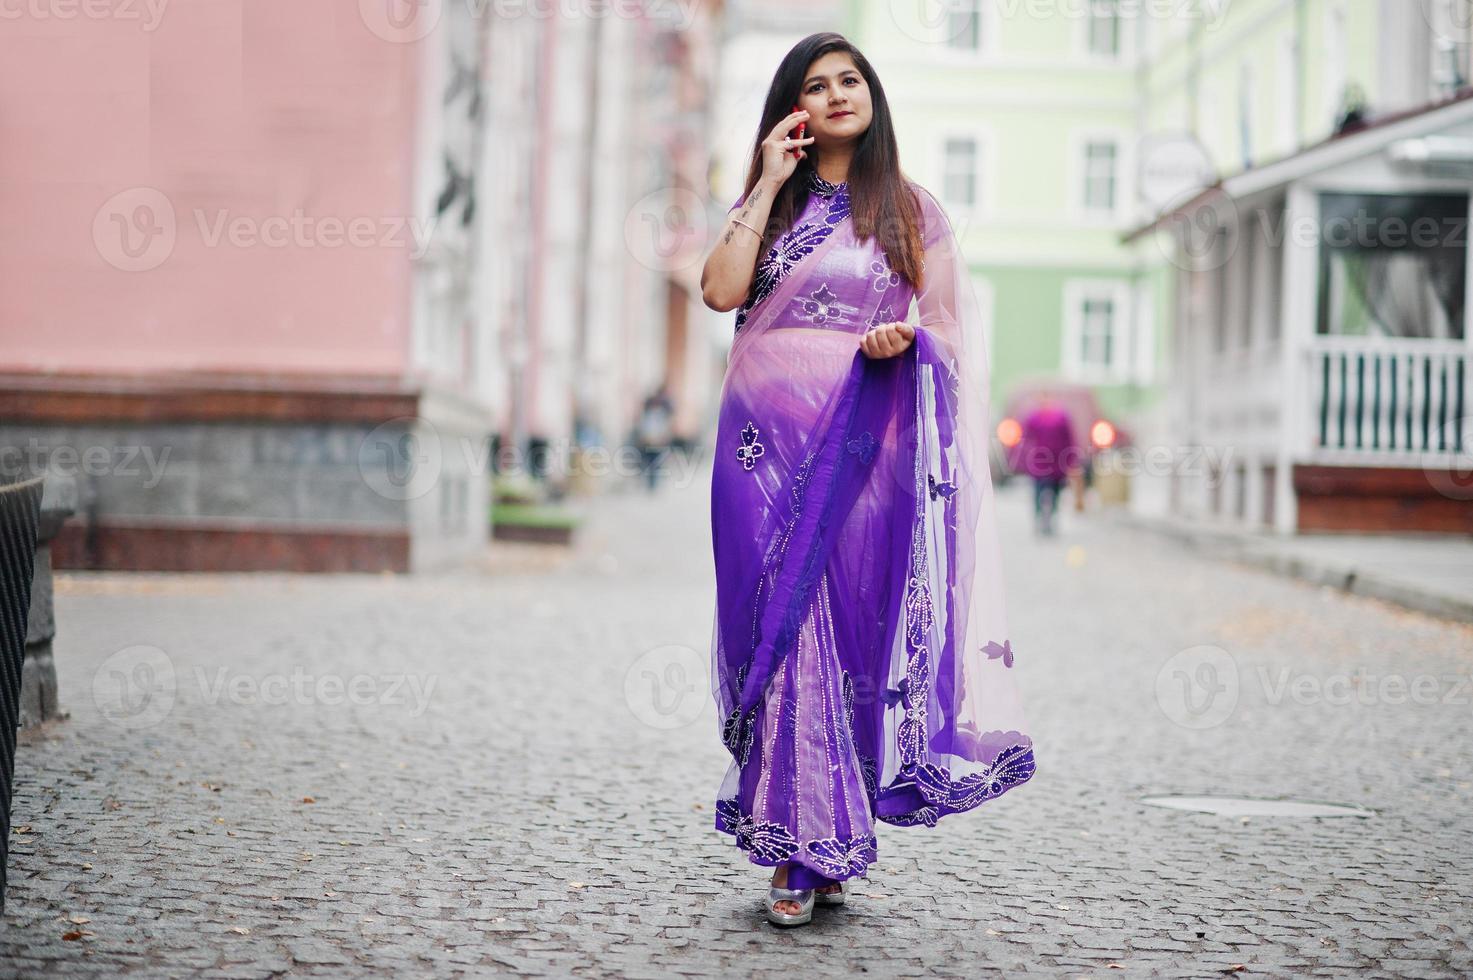 garota hindu indiana no tradicional saree violeta posou na rua e falando no telefone. foto